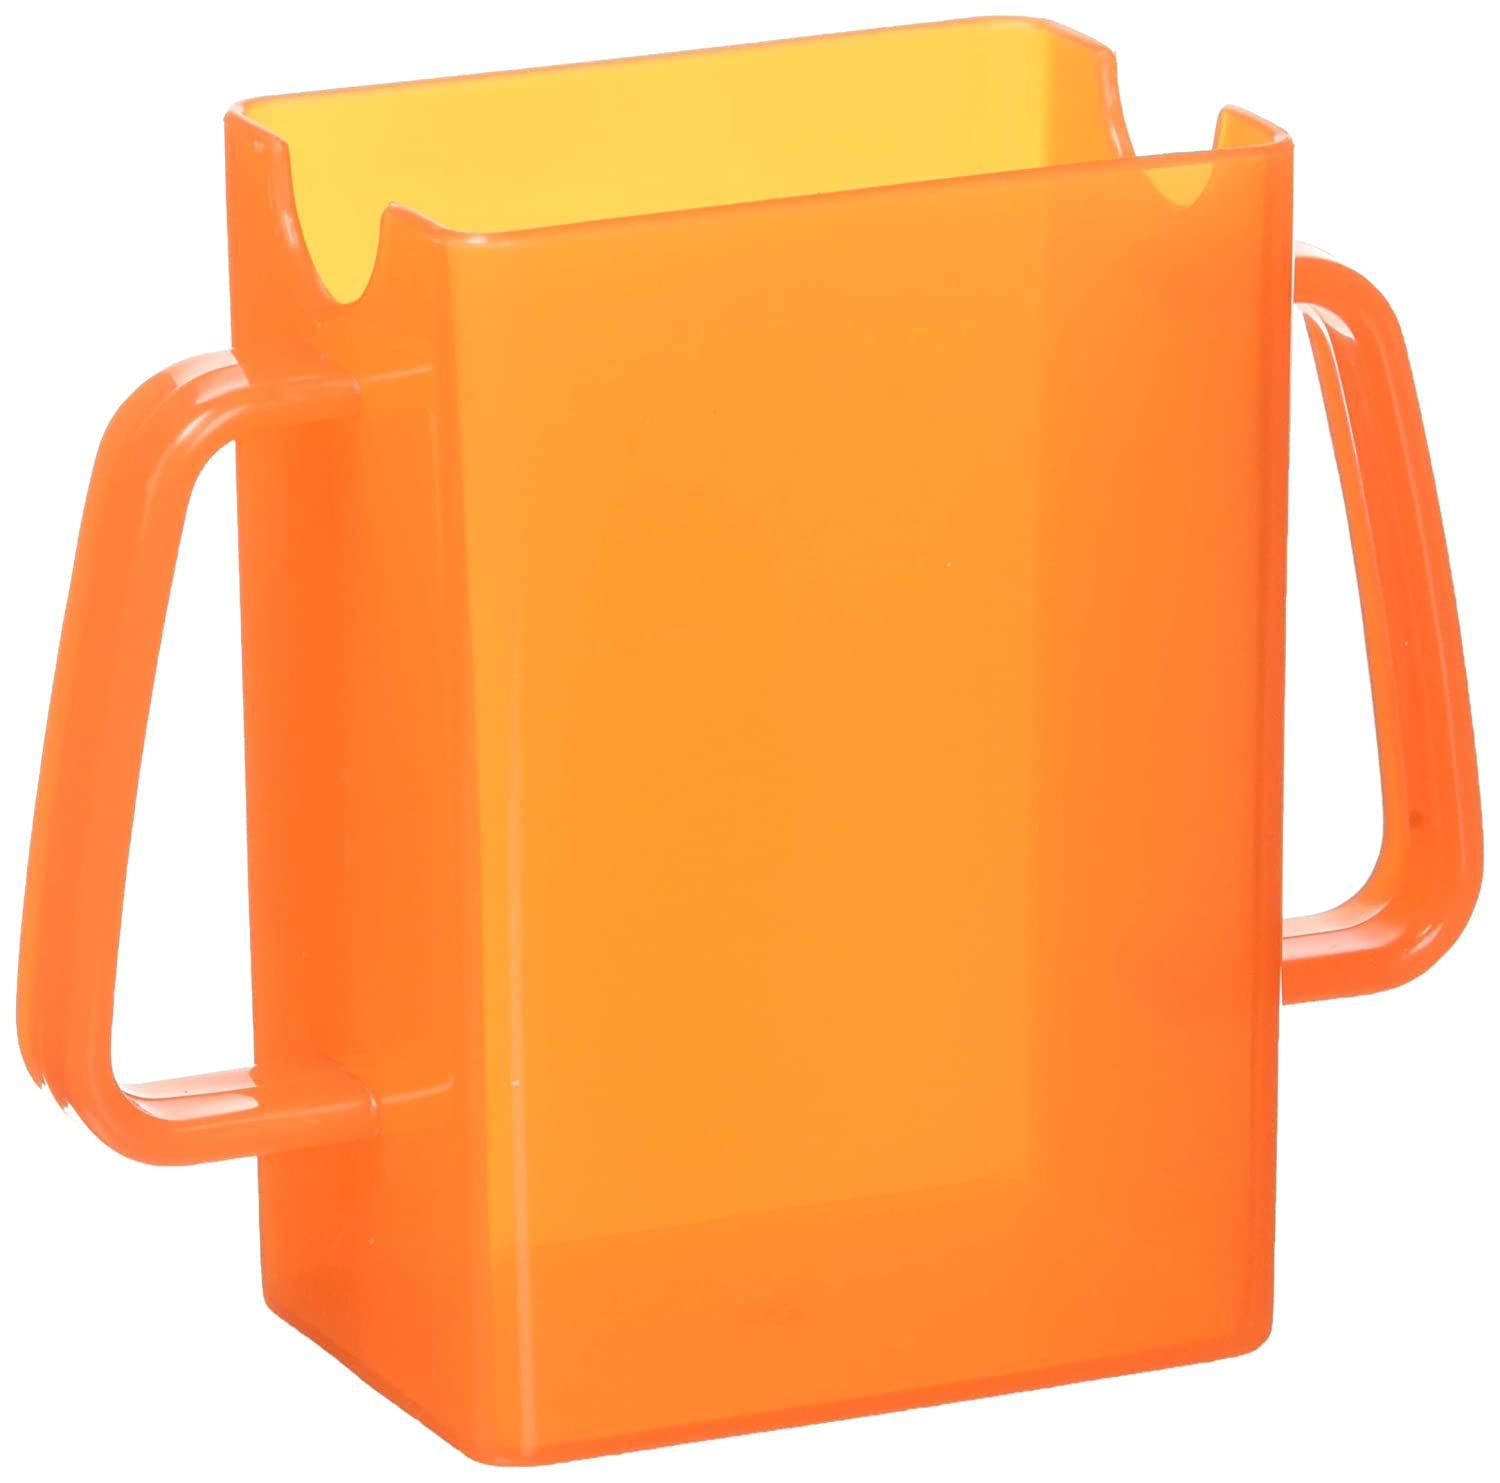 Mommys Helper Juice Box Buddies Cups & Sipper - Orange - MH02287